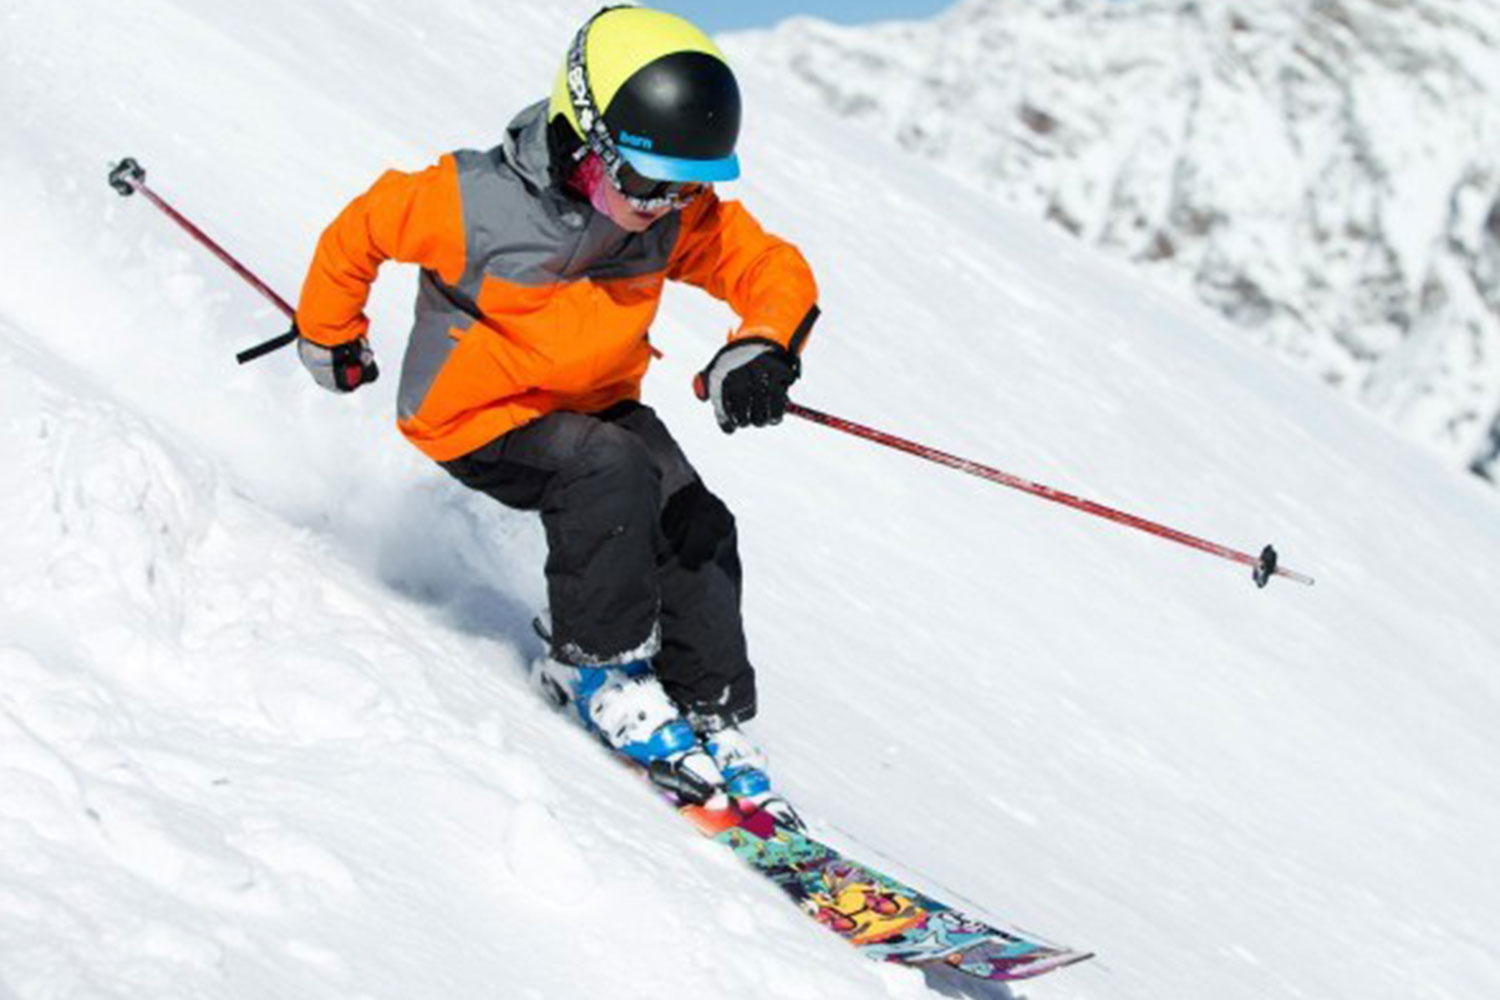 Www skis com. Дети на сноуборде. Skiing Kids. Лук горнолыжный детский. Skis.